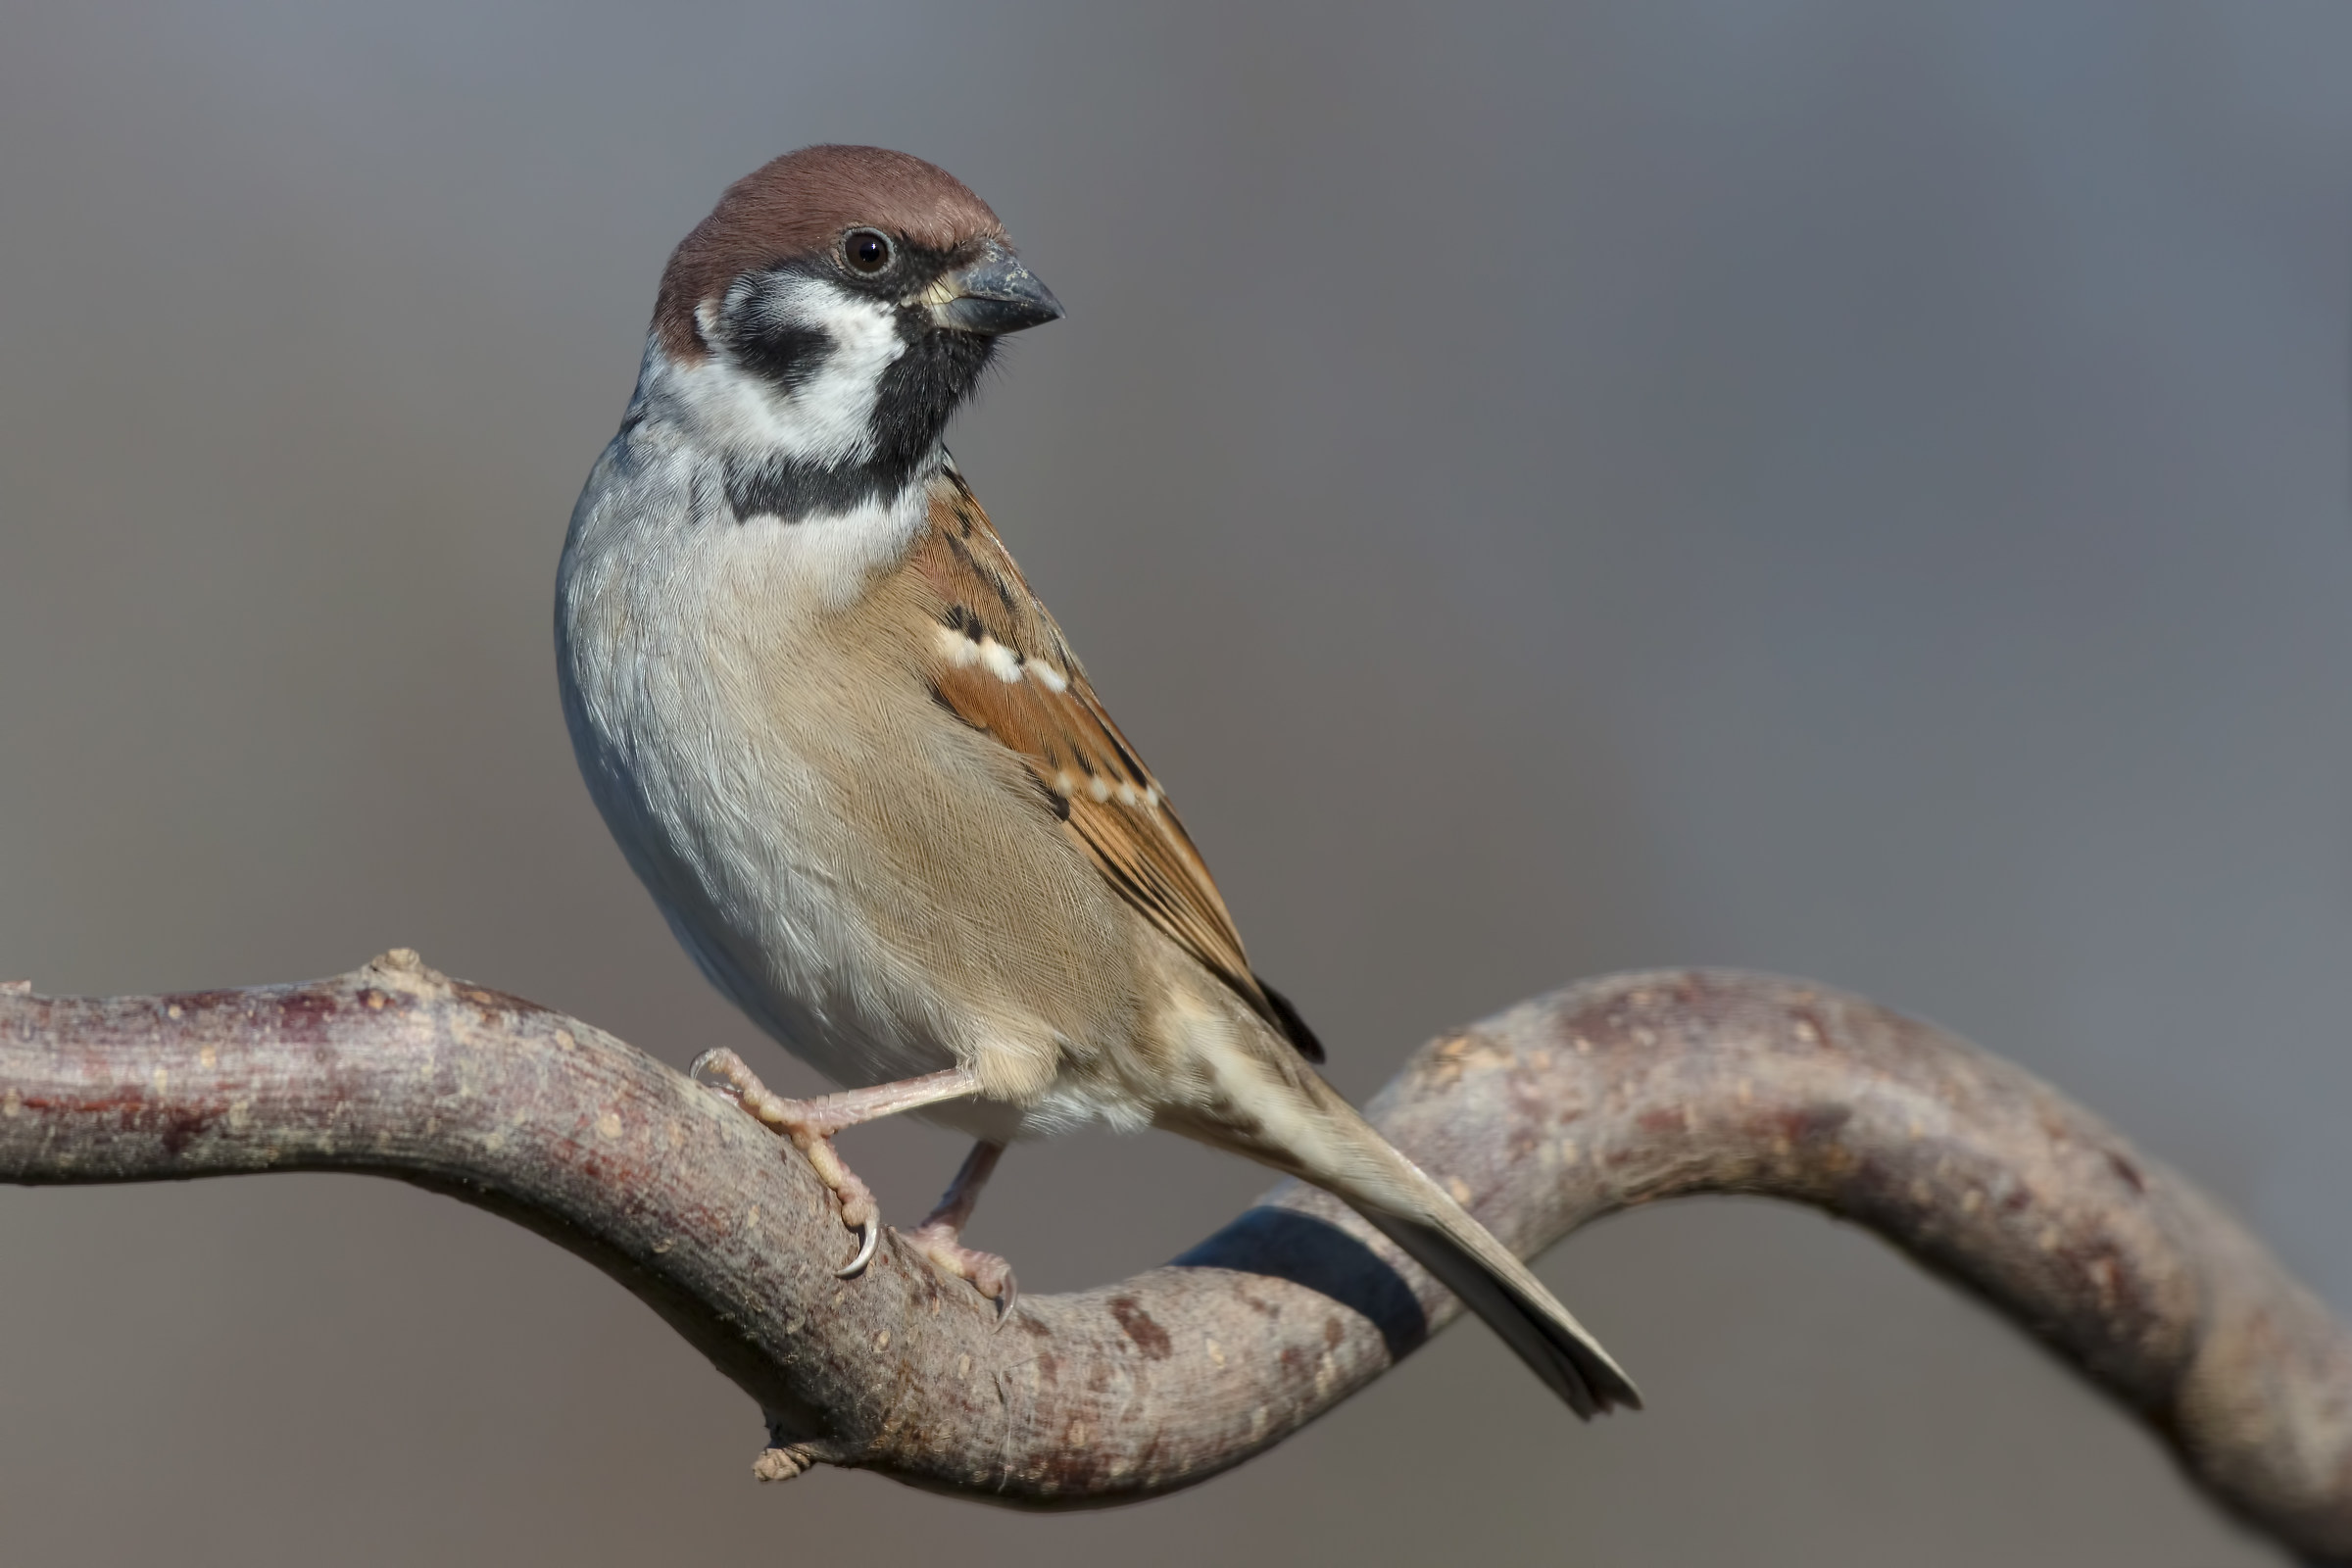 A common sparrow...